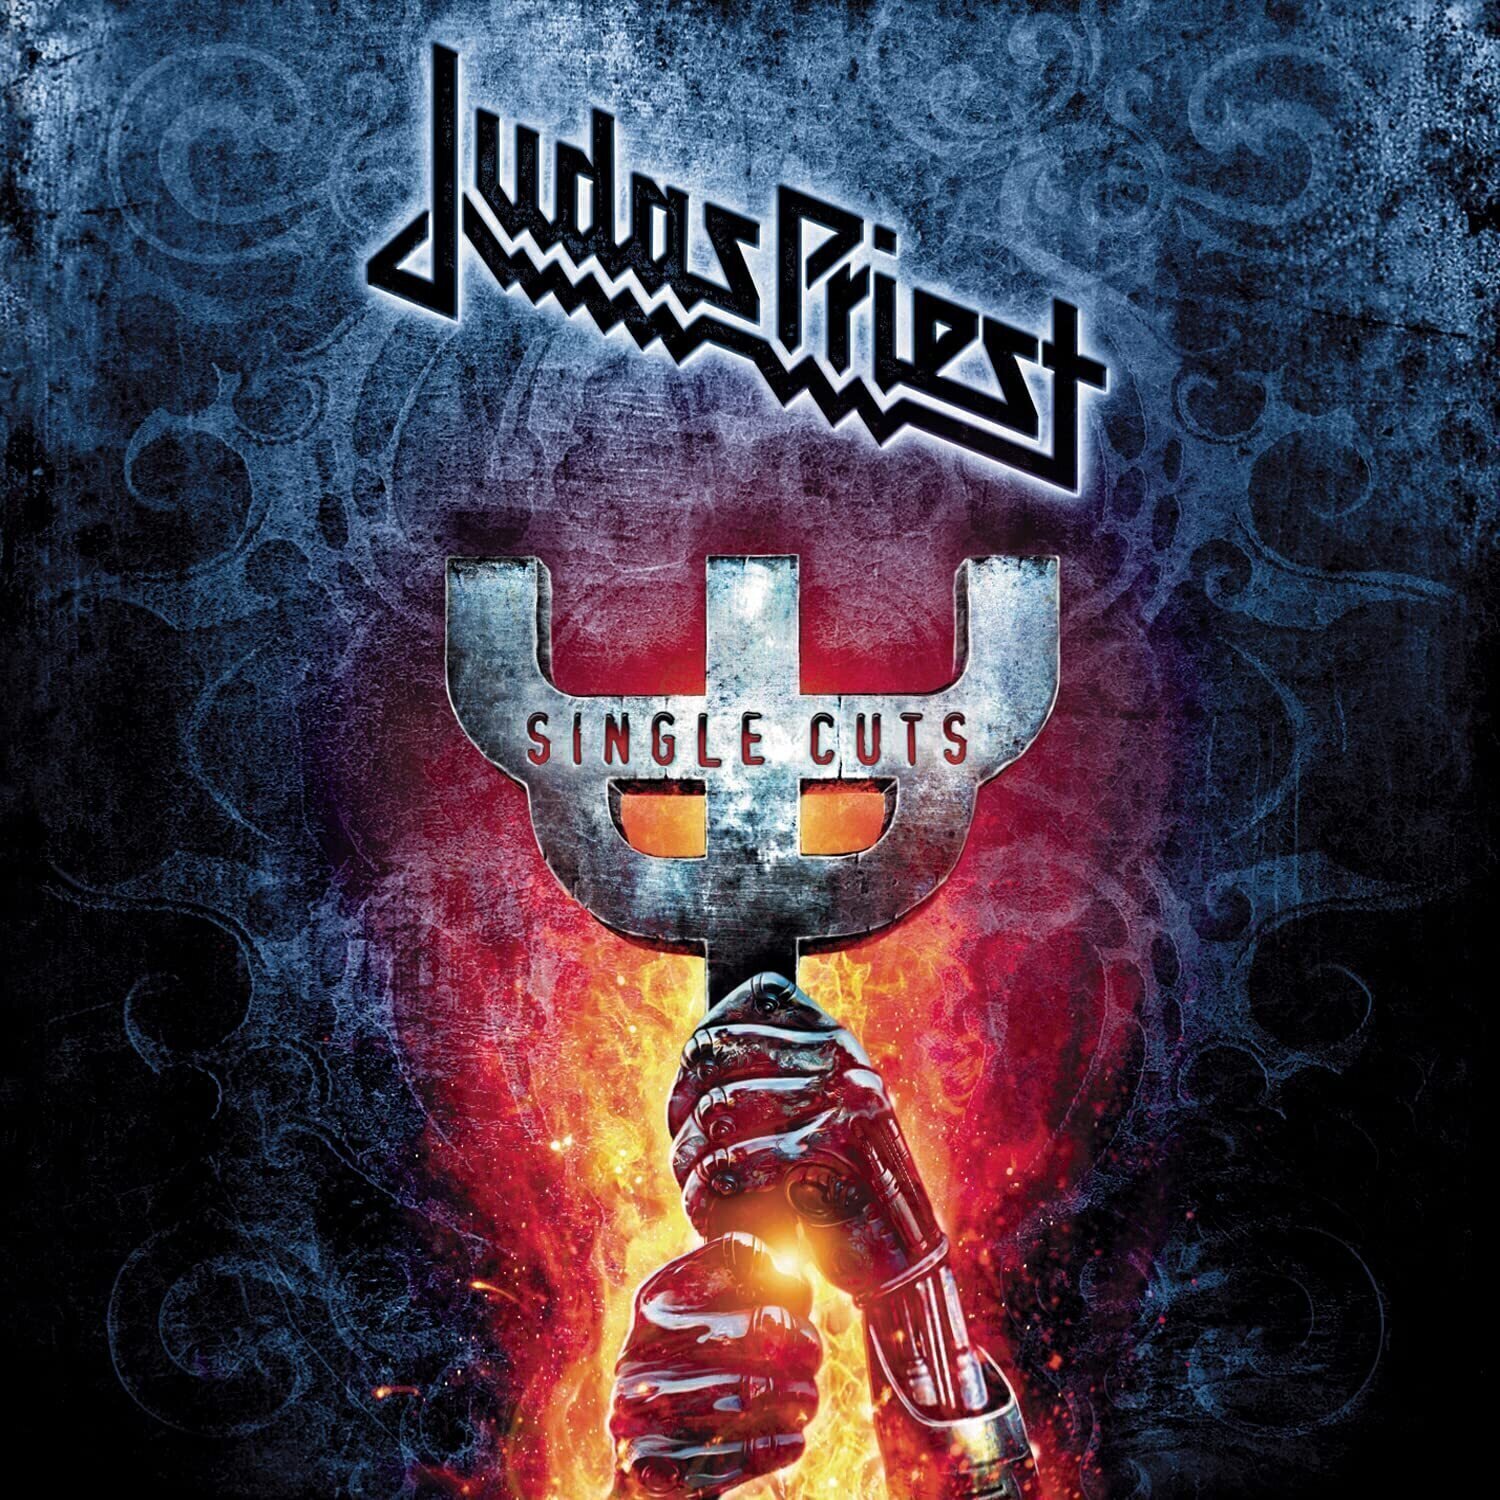 CD de música Judas Priest - Single Cuts (CD)